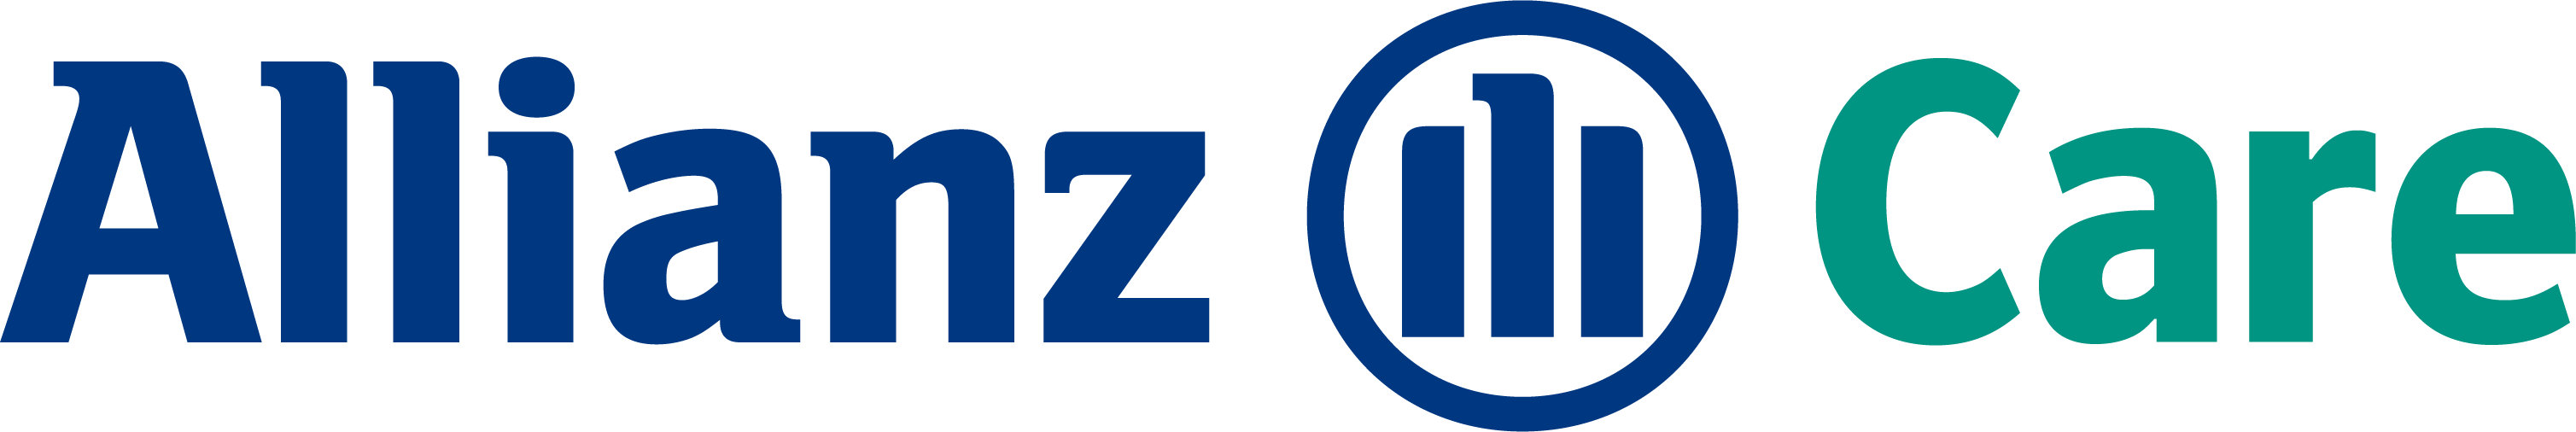 Allianz Worldwide